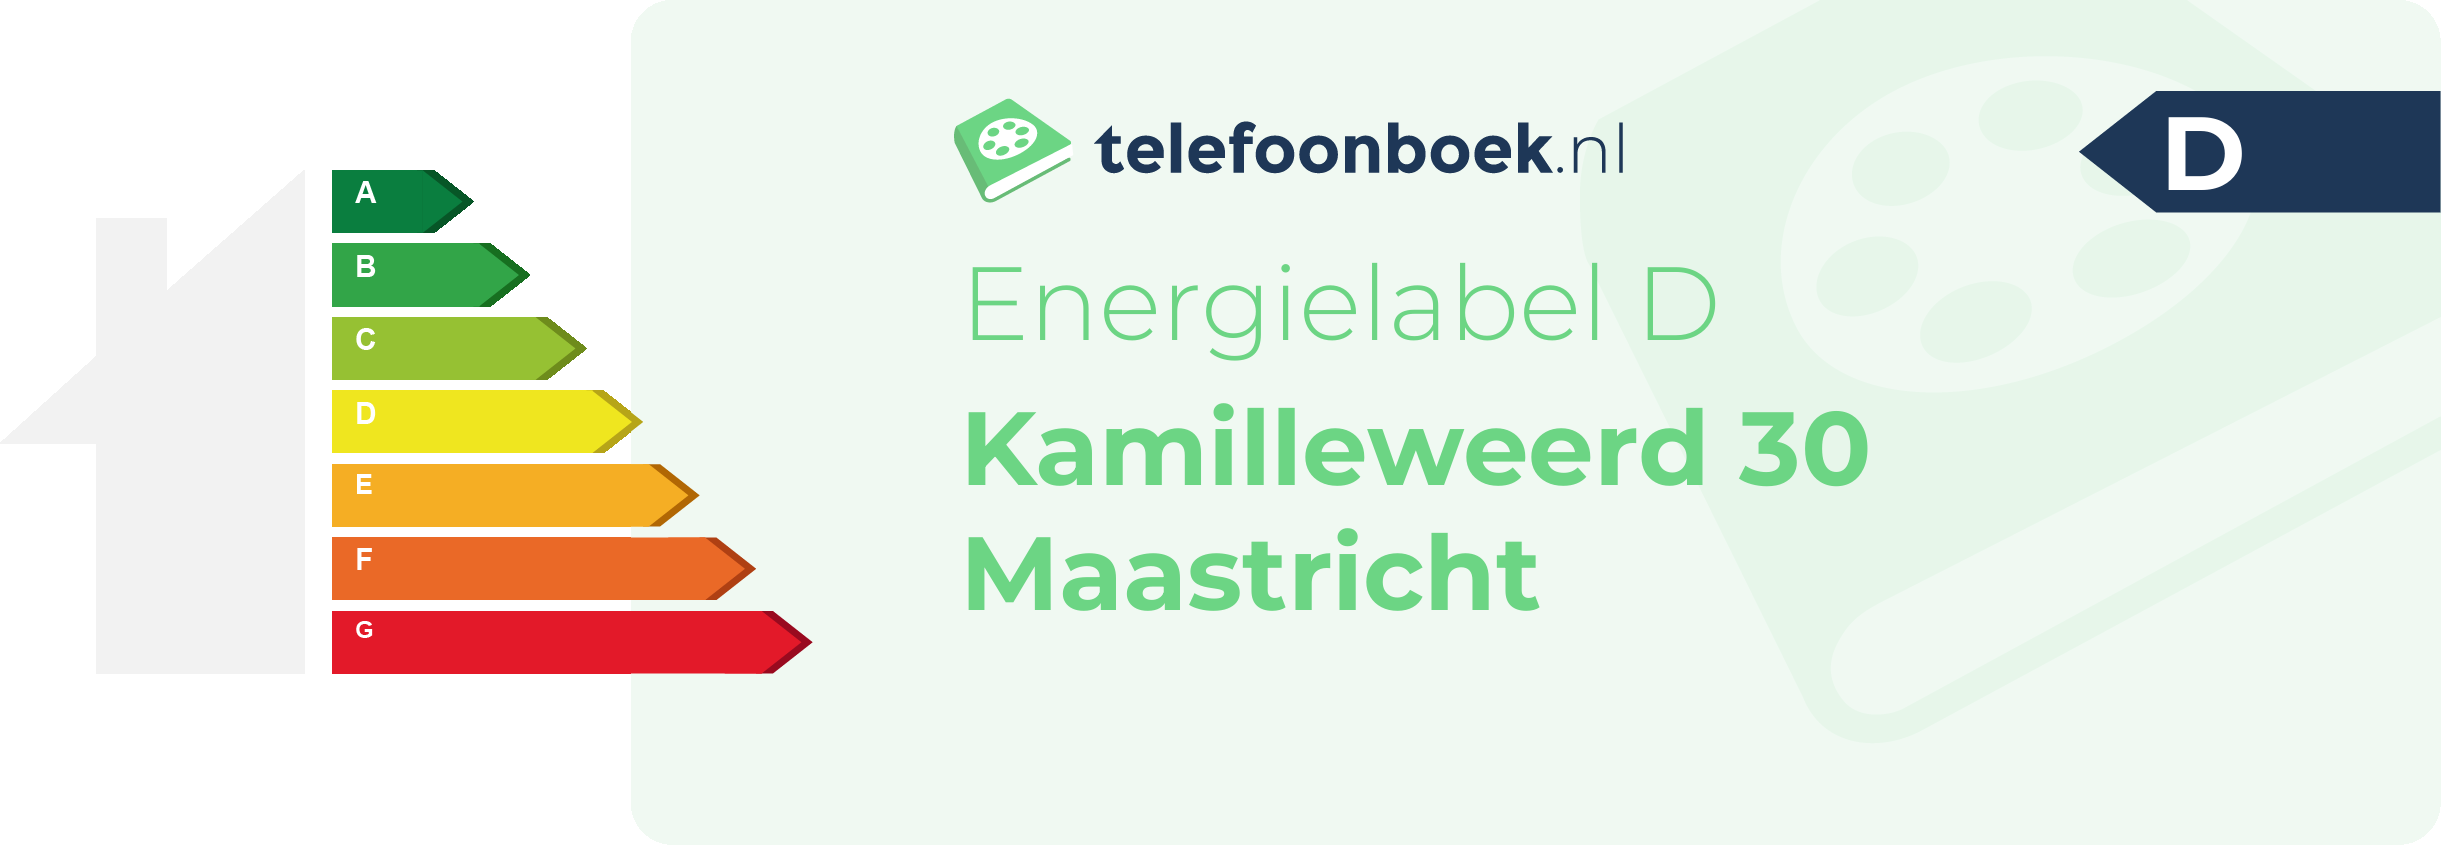 Energielabel Kamilleweerd 30 Maastricht